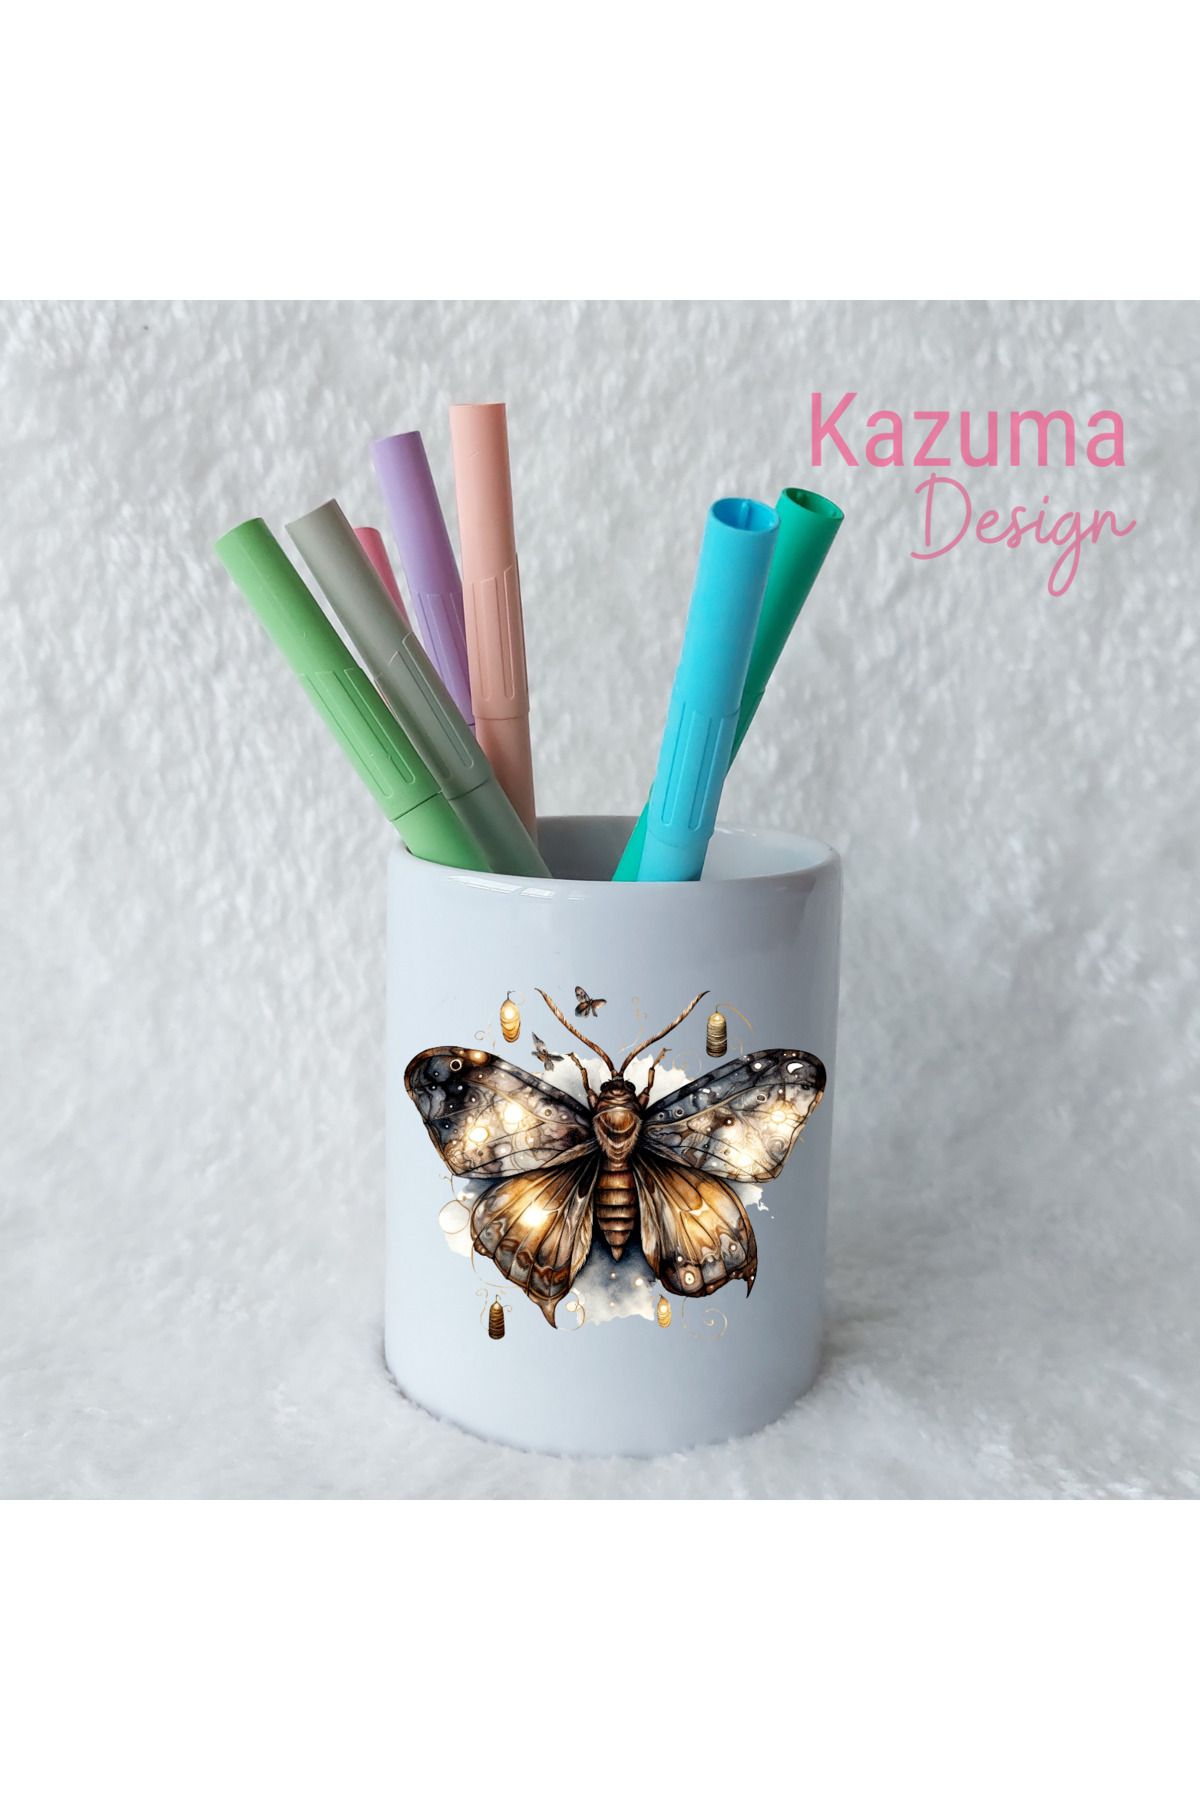 Kazuma Design Otantik Basklı Seramik Kalemlik Masa Üstü Kalem Kutusu